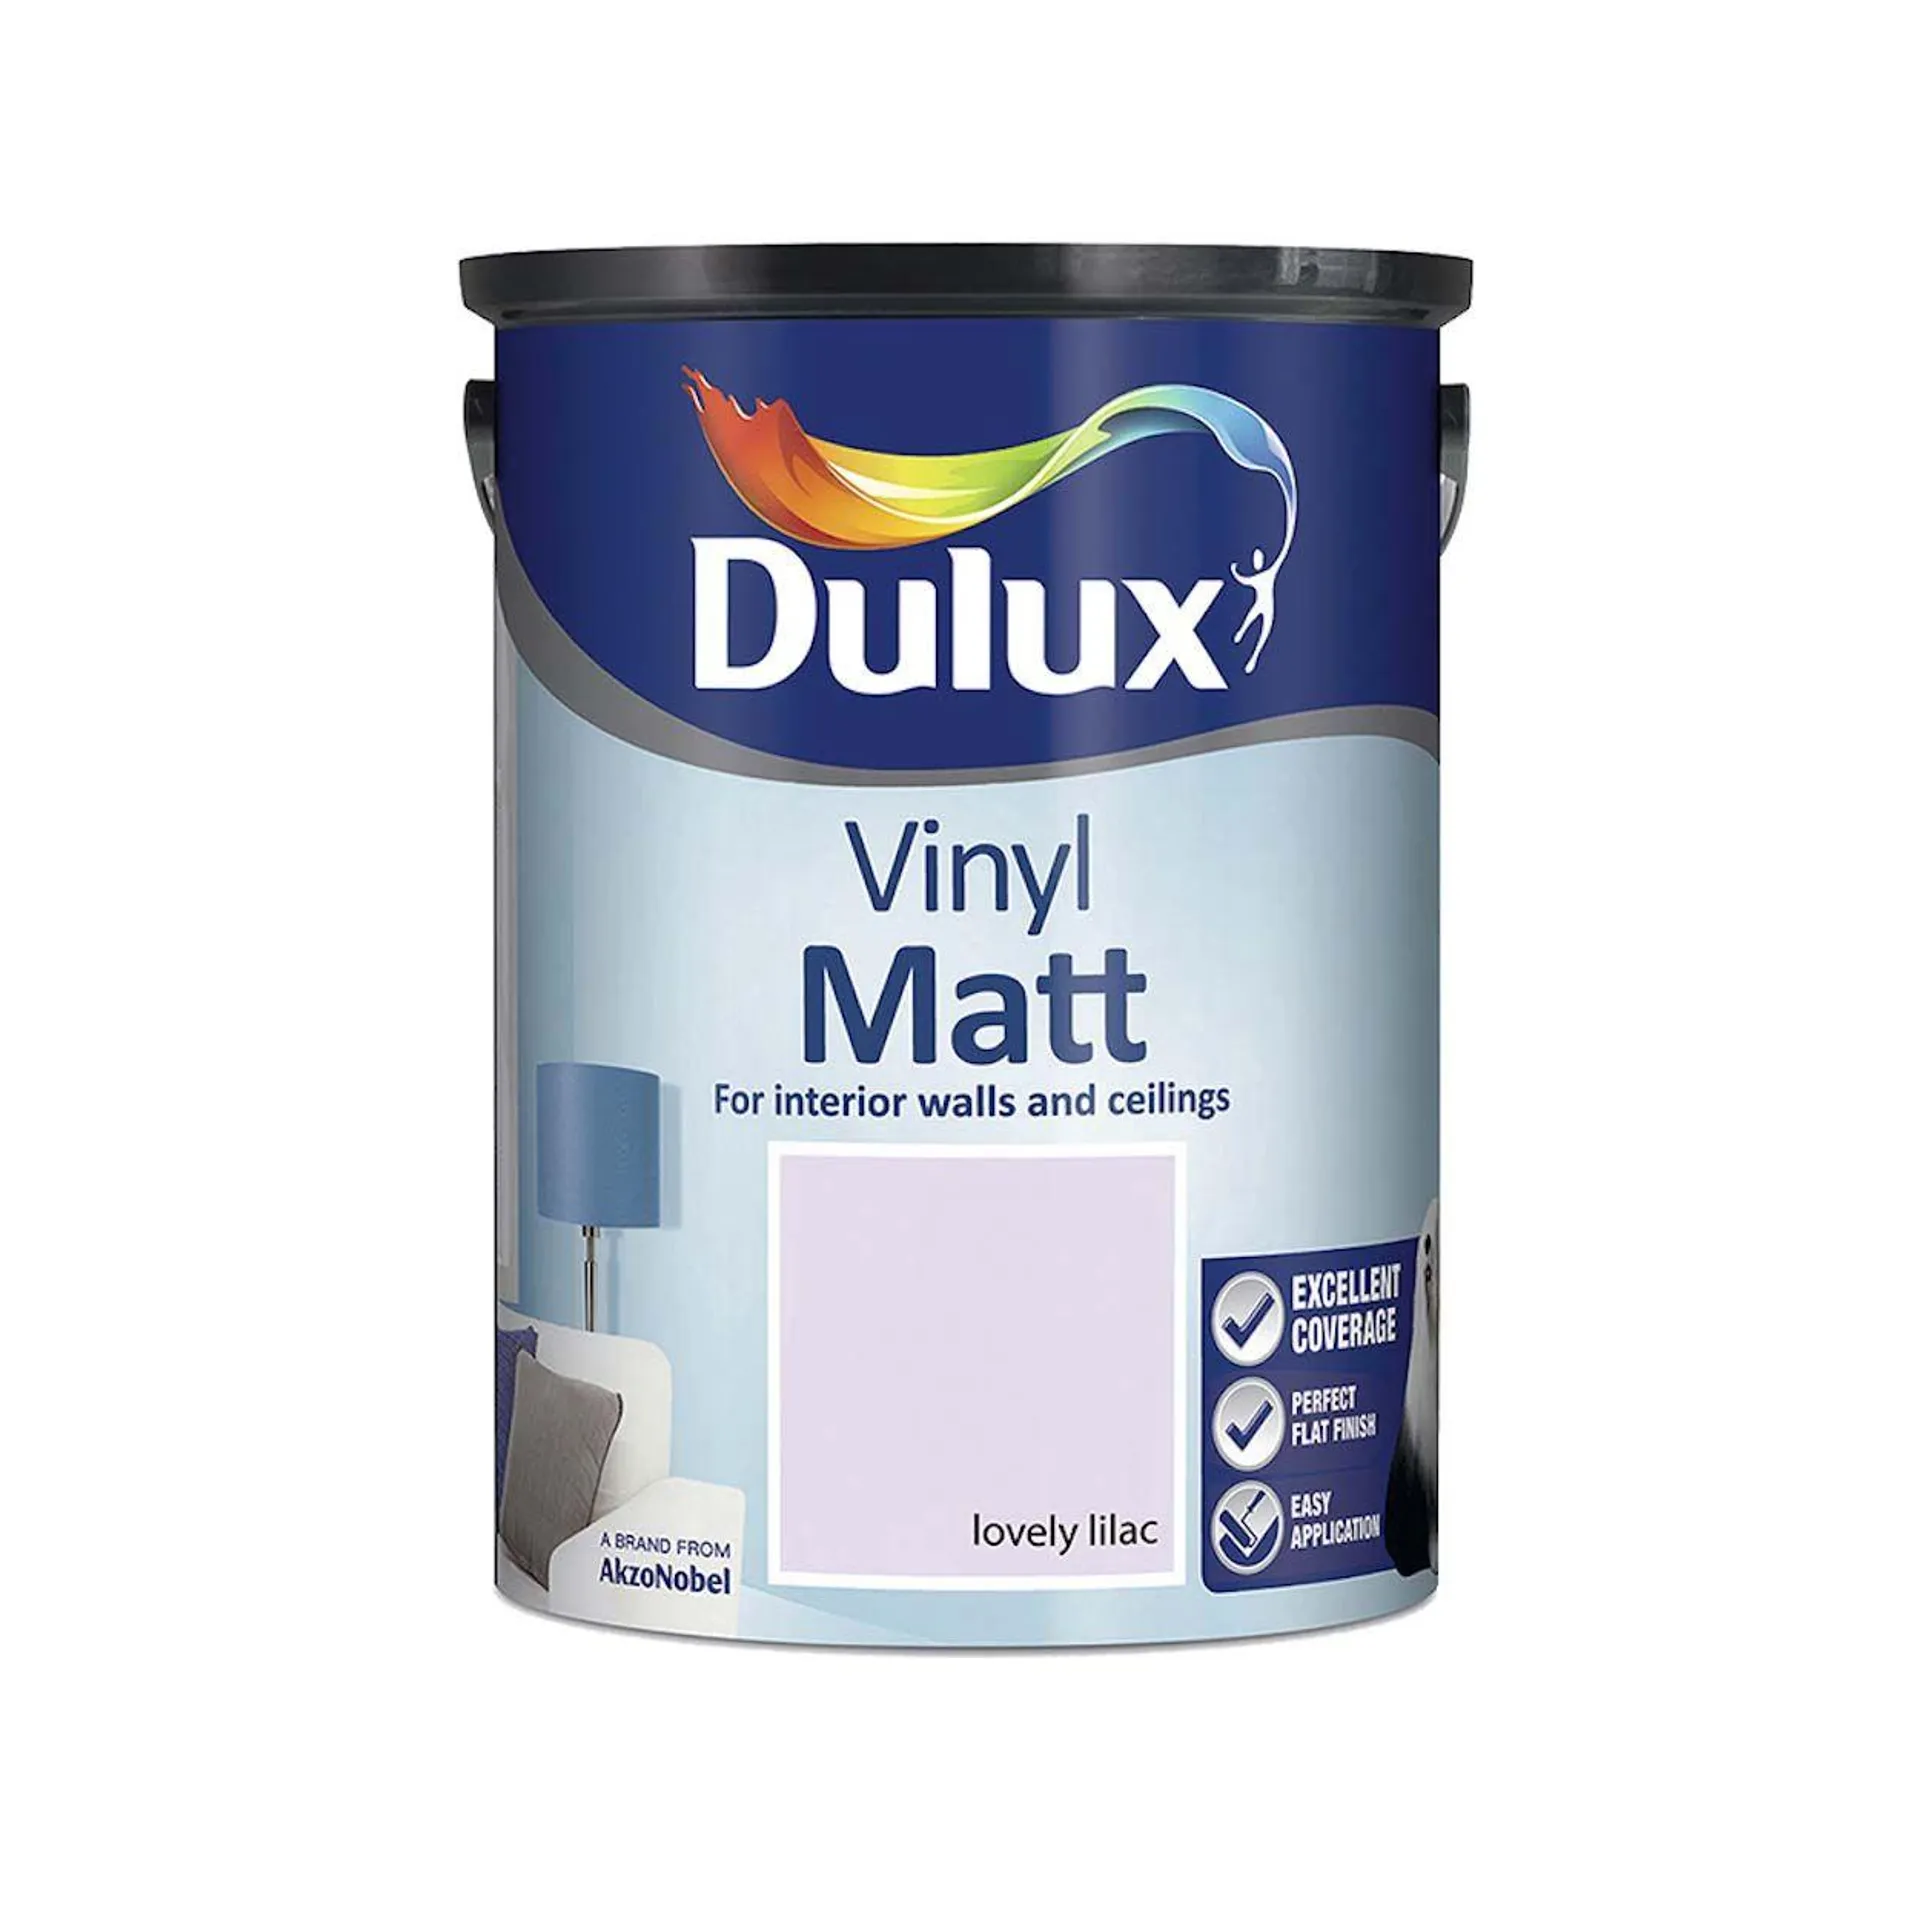 Dulux Vinyl Matt Lovely Lilac 5L